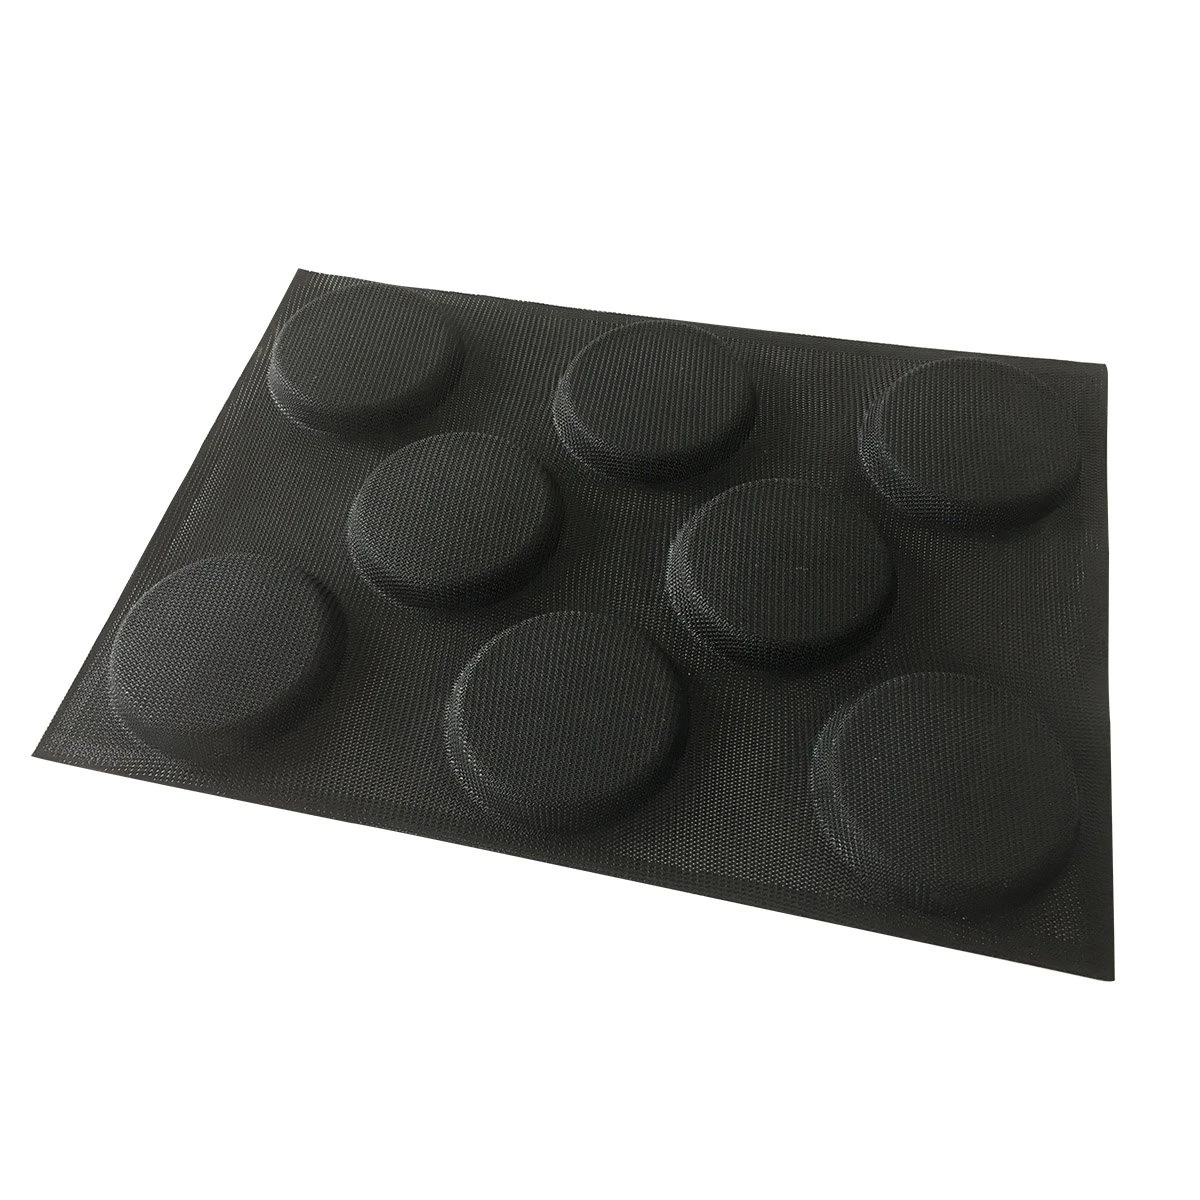 Renjia high quality silicone mold cake hamburger baking tray non stick mesh baking sheet reusable silicon baking sheet